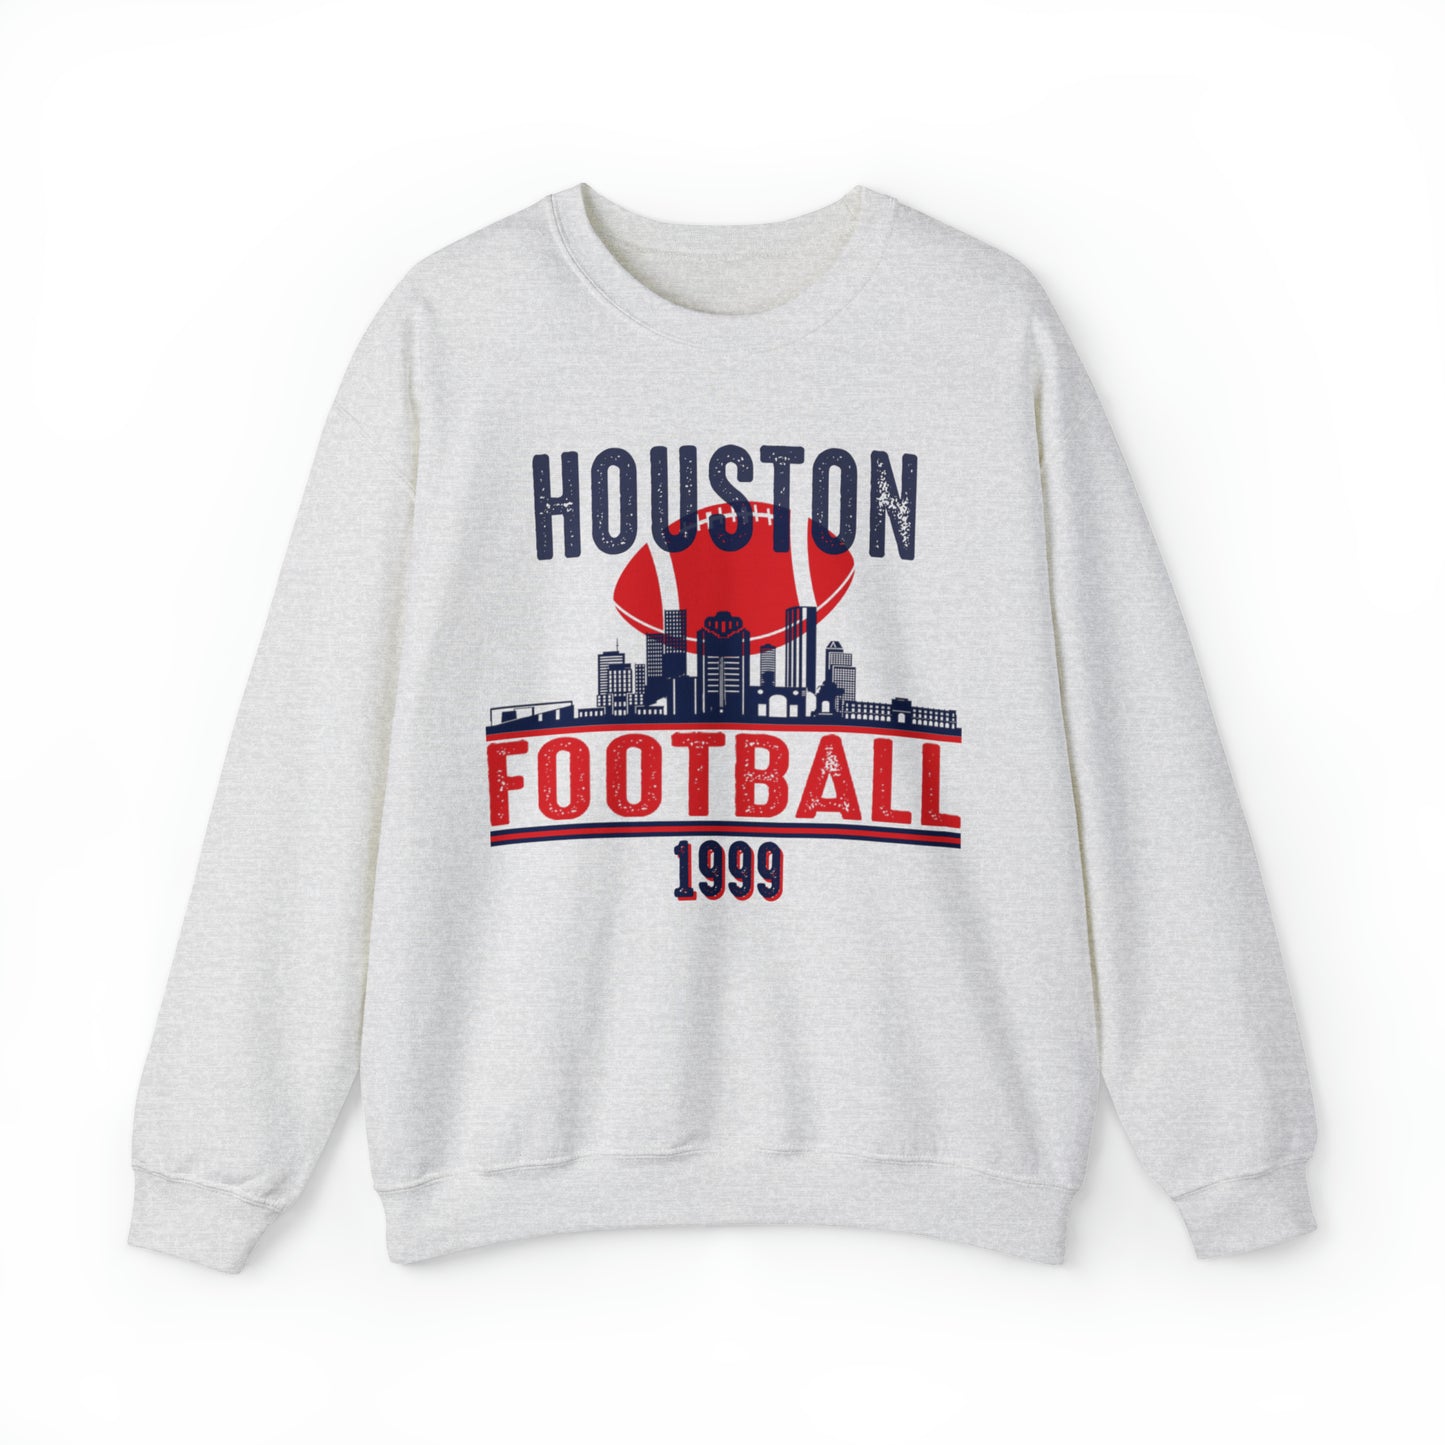 Houston Texans Football Sweatshirt